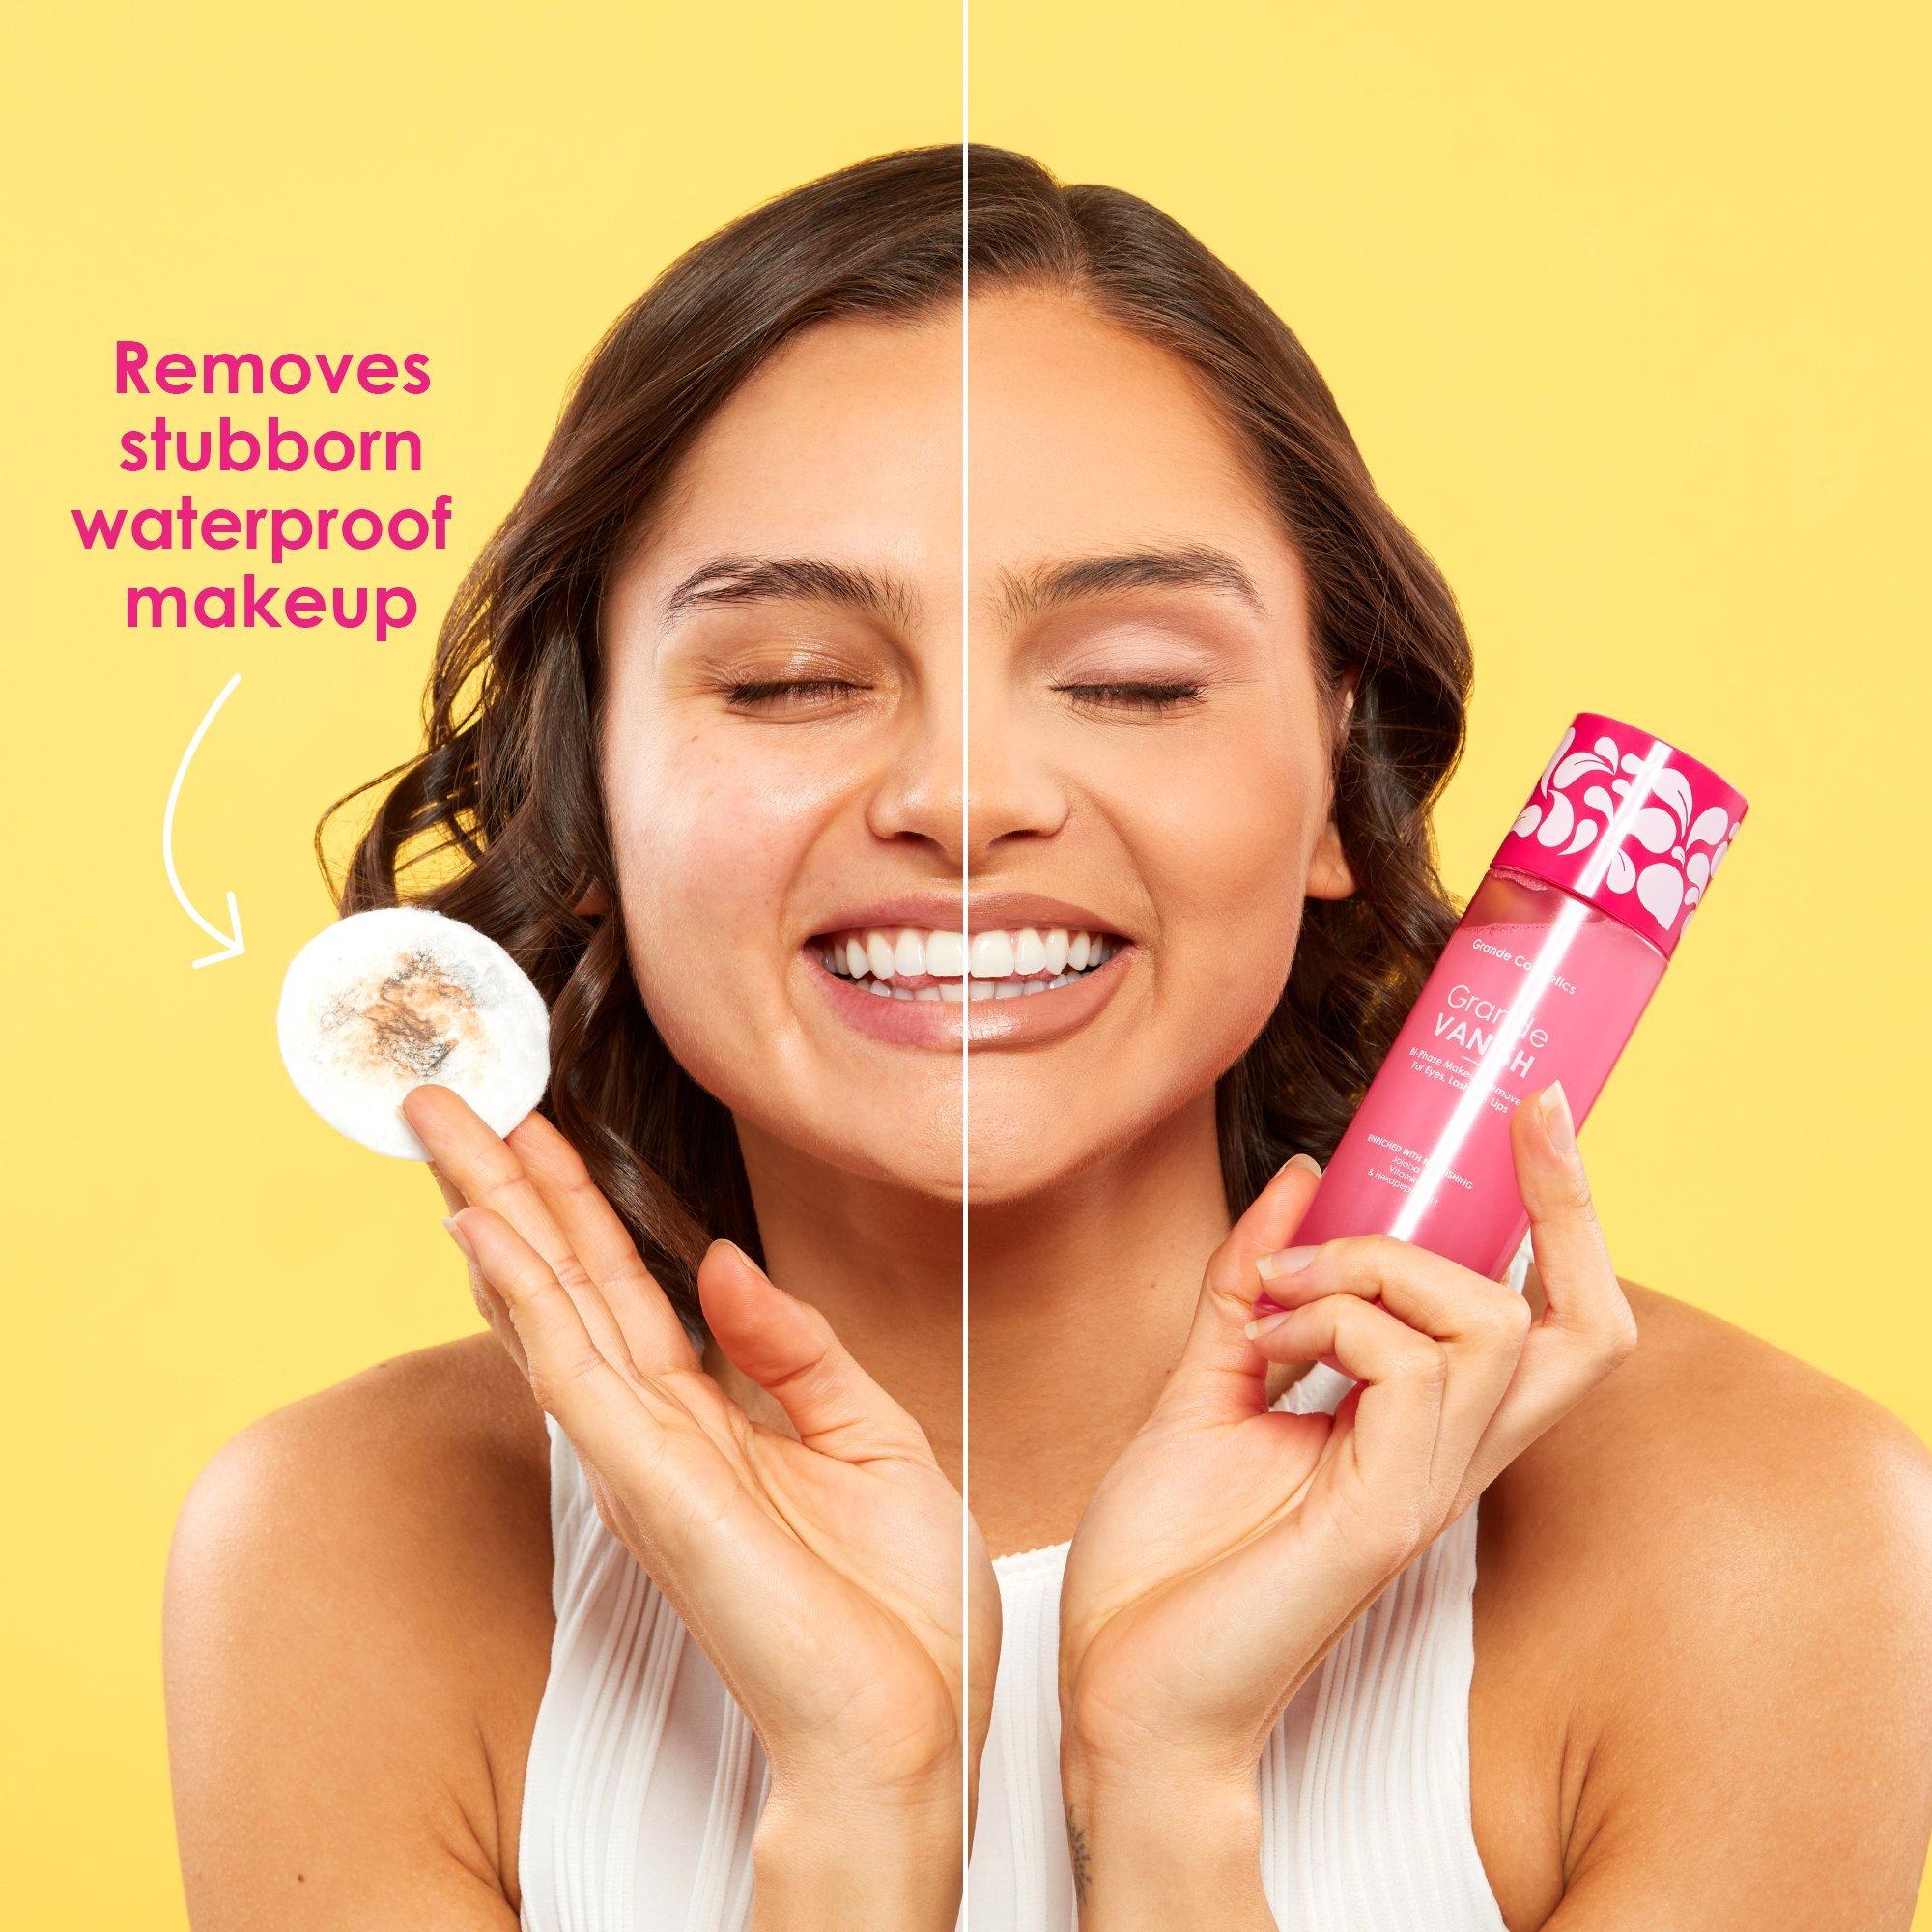 GrandeVANISH Bi-Phase Makeup Remover for Eyes, Lashes & Lips / 4OZ